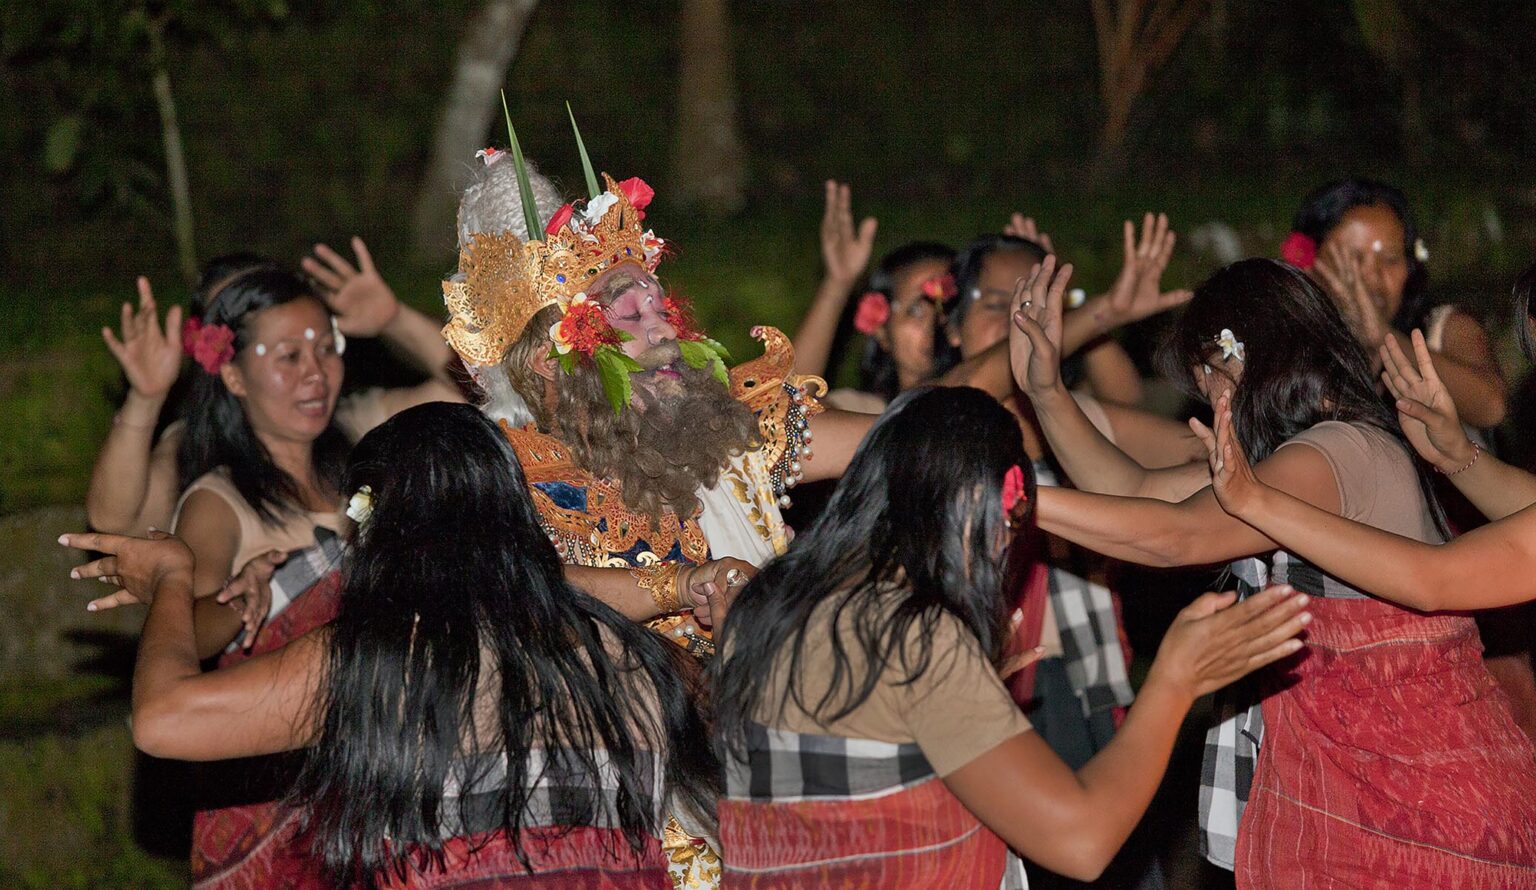 The JUNUNGAN village is the only female KECAK SRIKANDHI (RAMAYANA MONKEY CHANT) DANCE TROUPE - UBUD, BALI